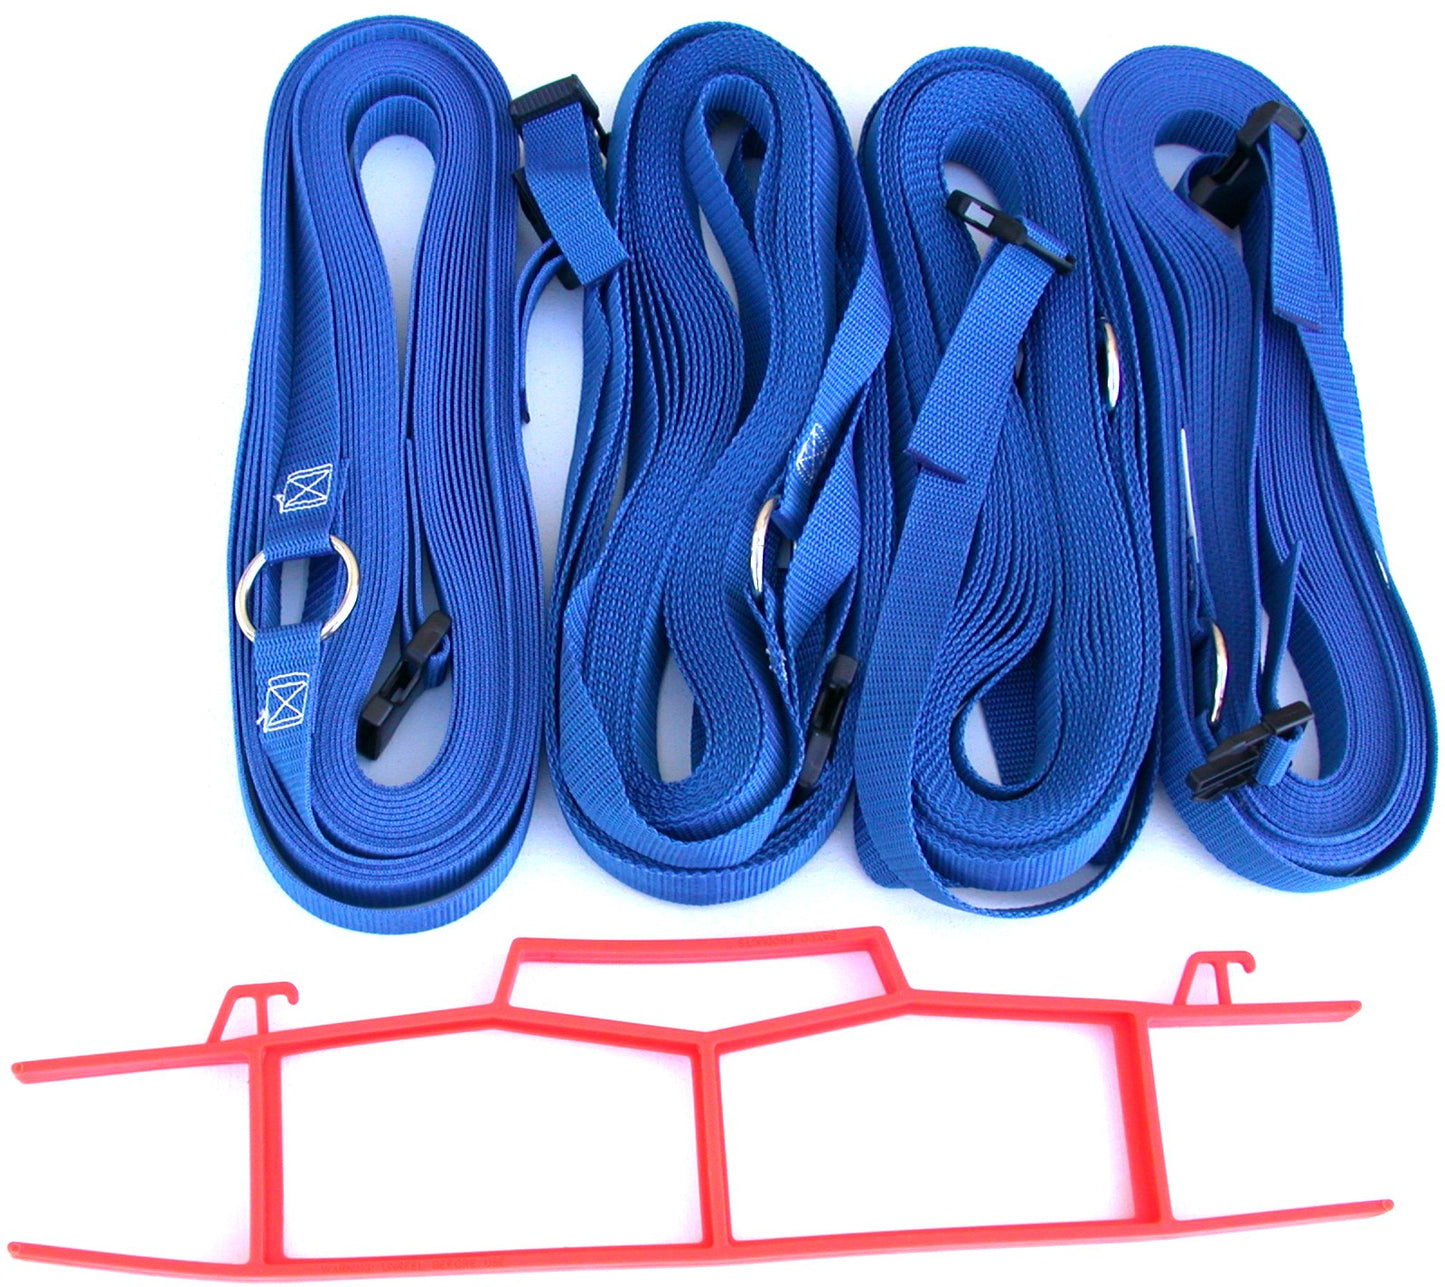 17ABU-blue 1-inch adjustable web boundary + storage winder